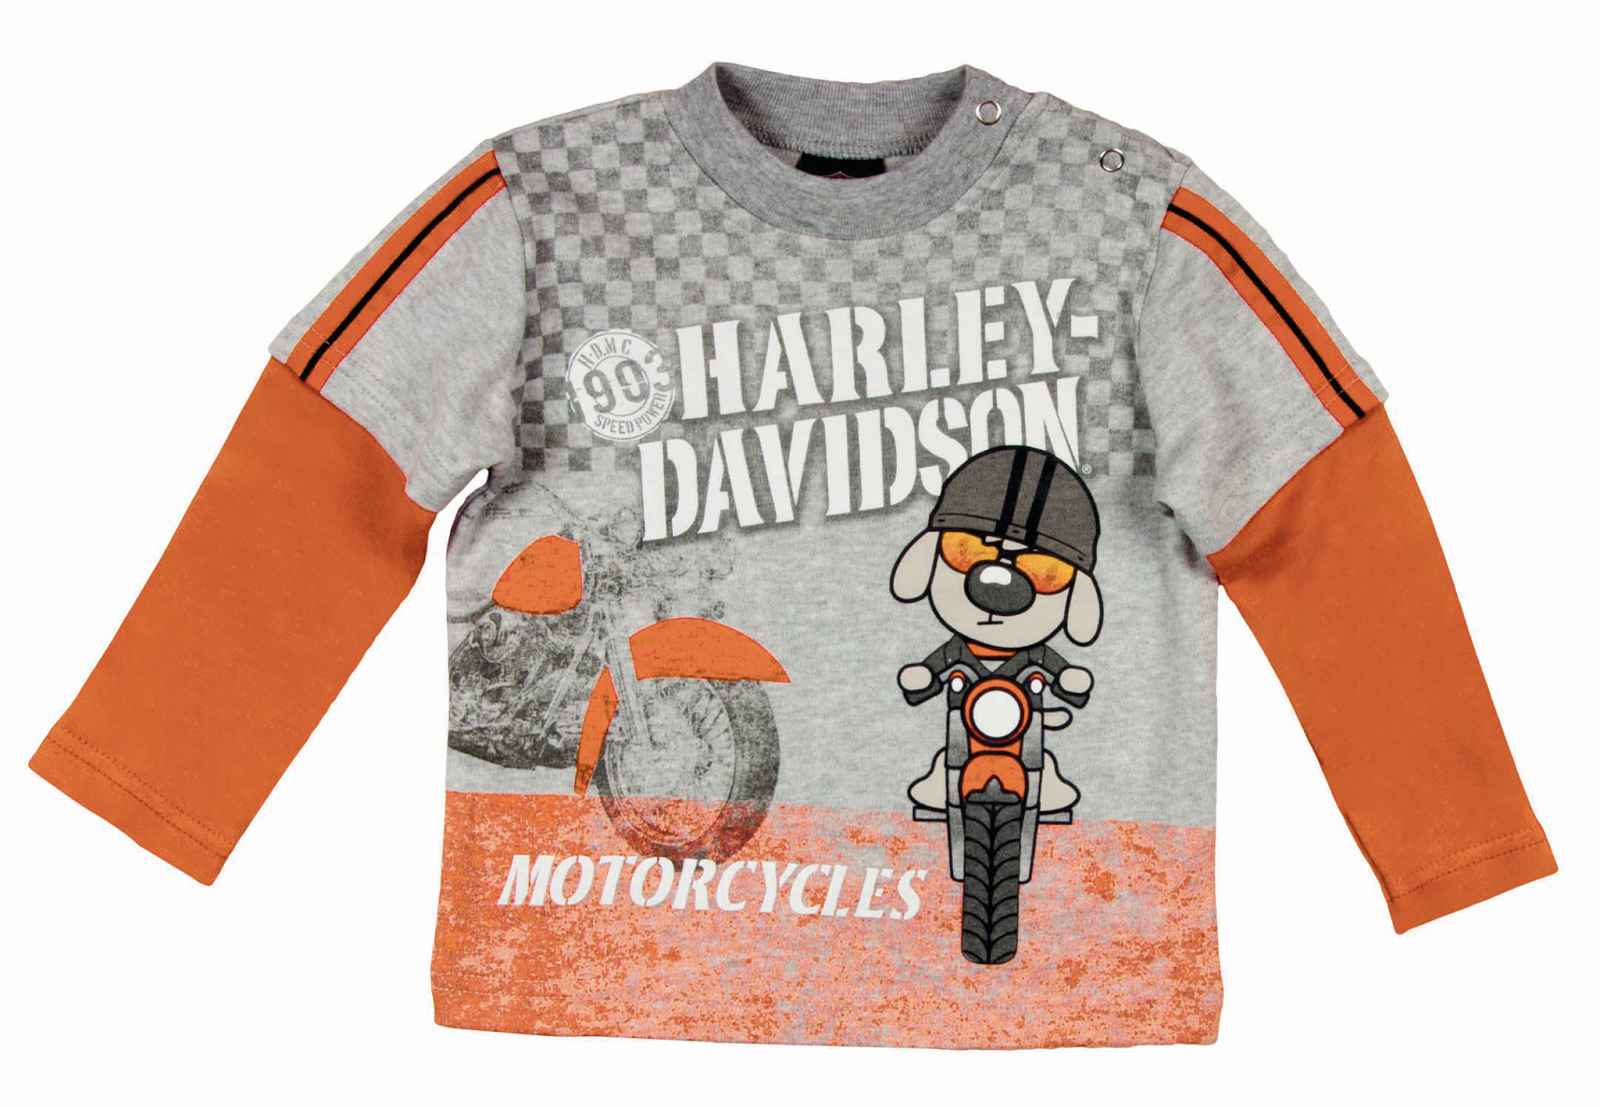 http://www.adventureharley.com/harley-davidson-boys-t-shirt-gray-orange